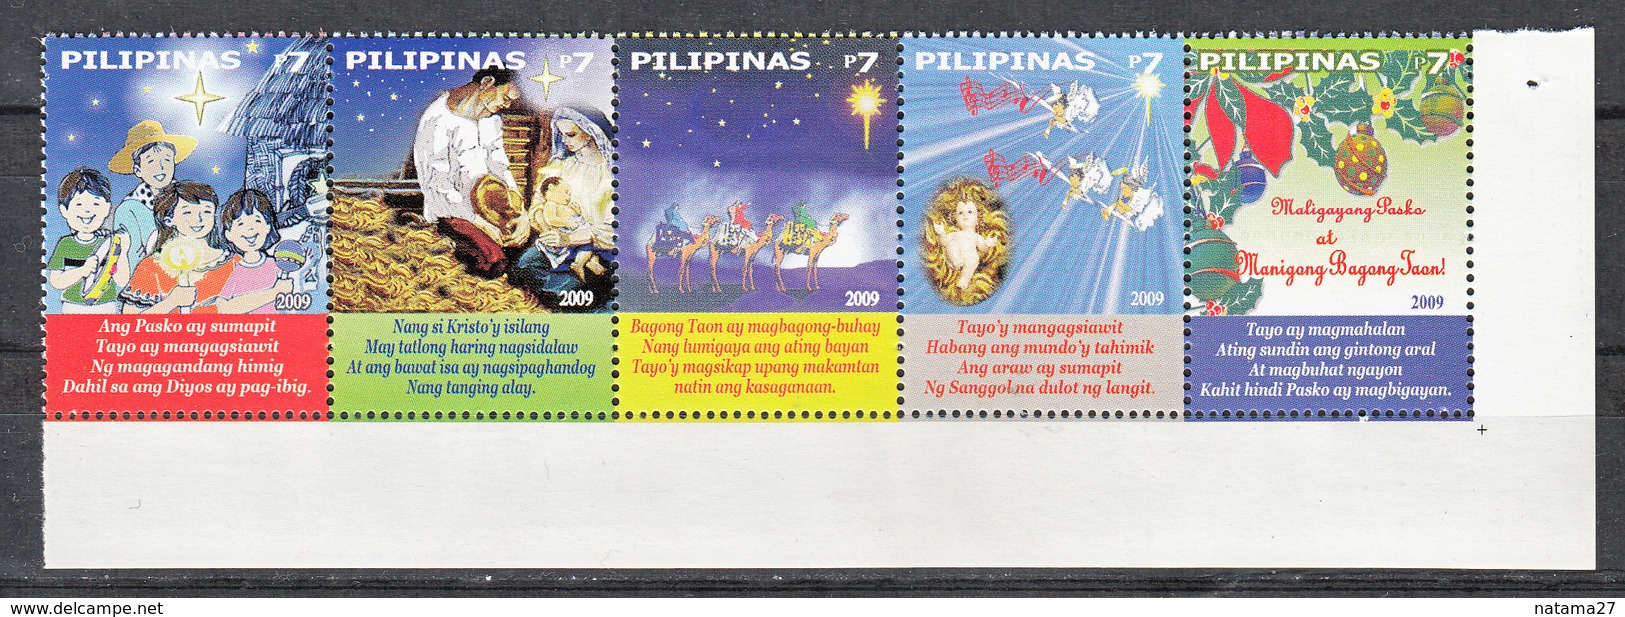 Filippine Philippines Philippinen Filipinas 2009 Christmas Carols In Pilipino 7p X 5 - Se-tenant Strips Of Five - MNH** - Filipinas